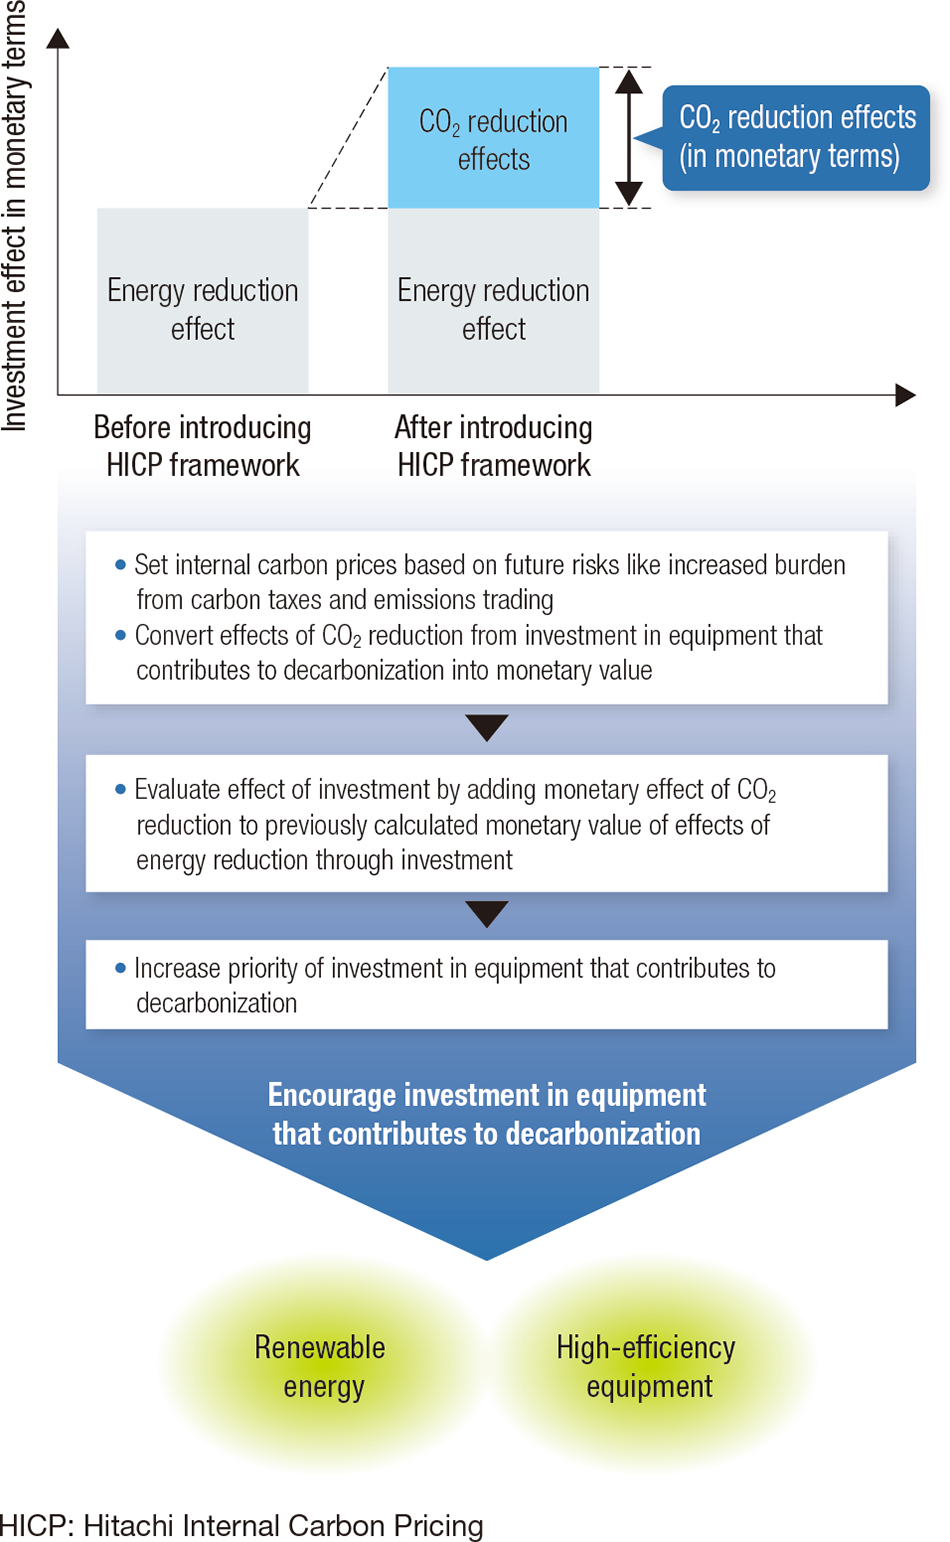 Figure 1 — Hitachi Internal Carbon Pricing (HICP) Framework